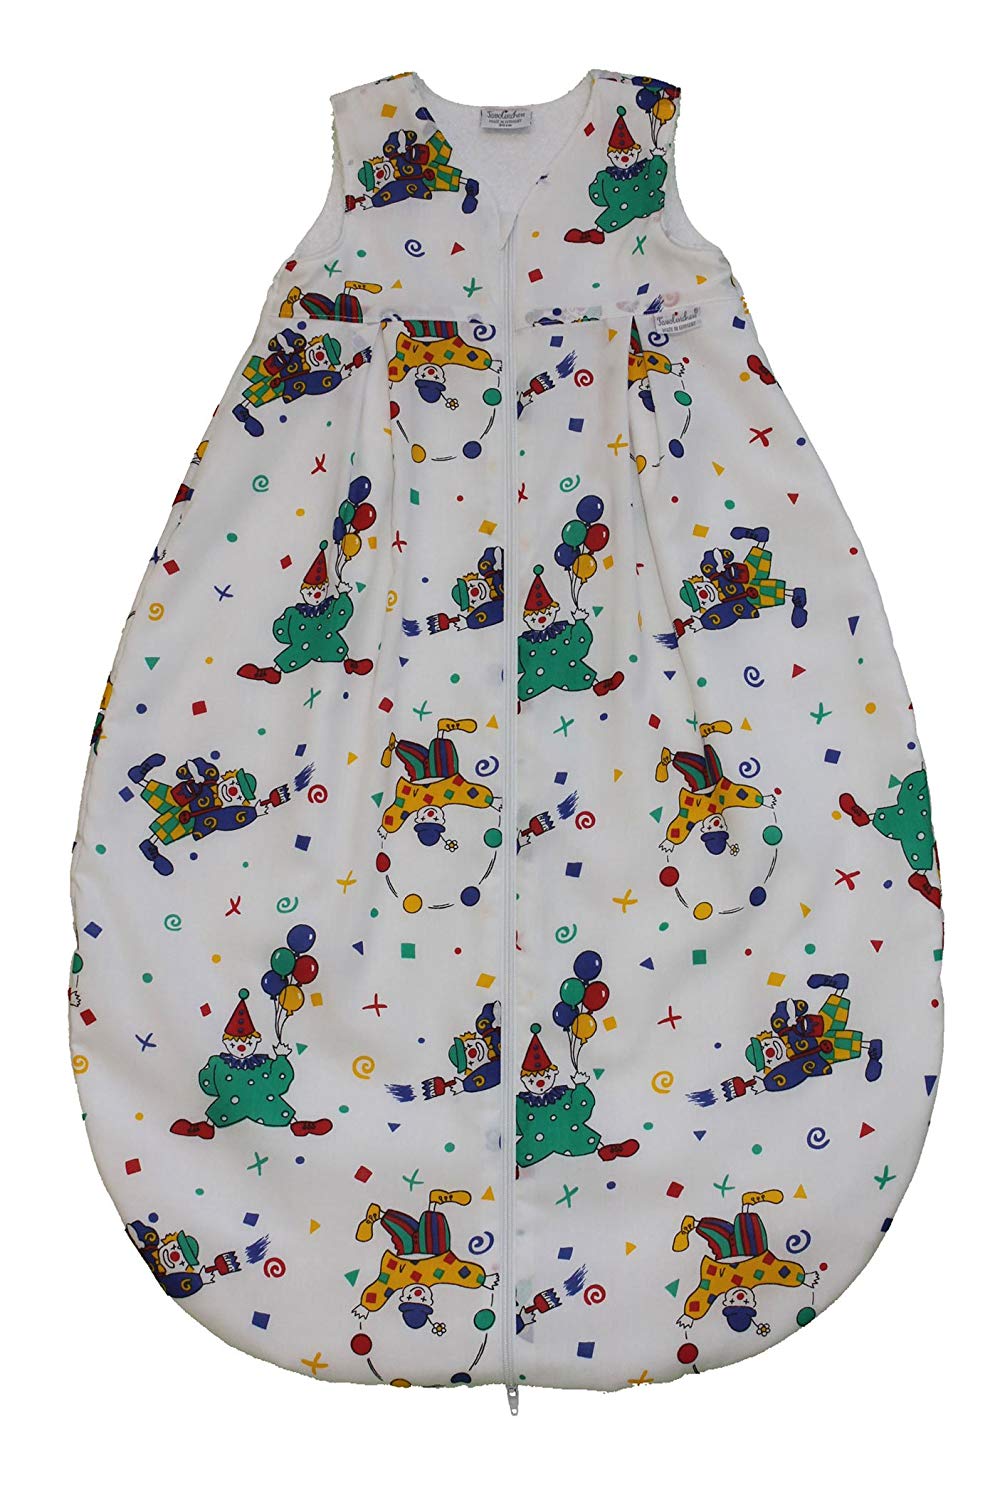 Tavolinchen 35/627 Terry Cloth Clown Sleeping Bag 110 cm 90 cm original